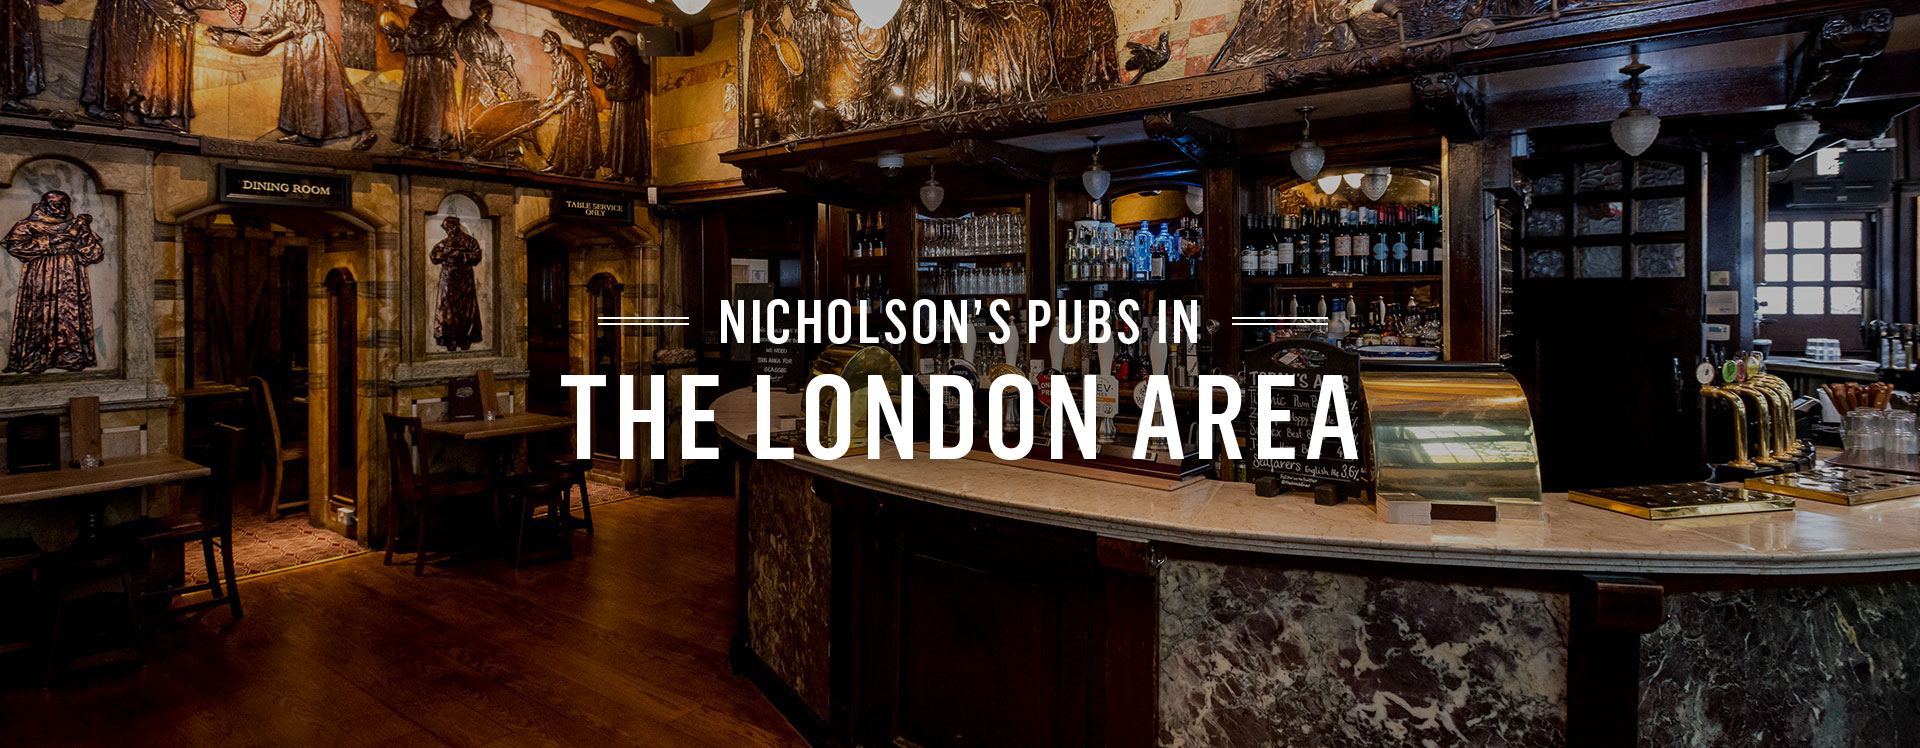 London Nicholson's